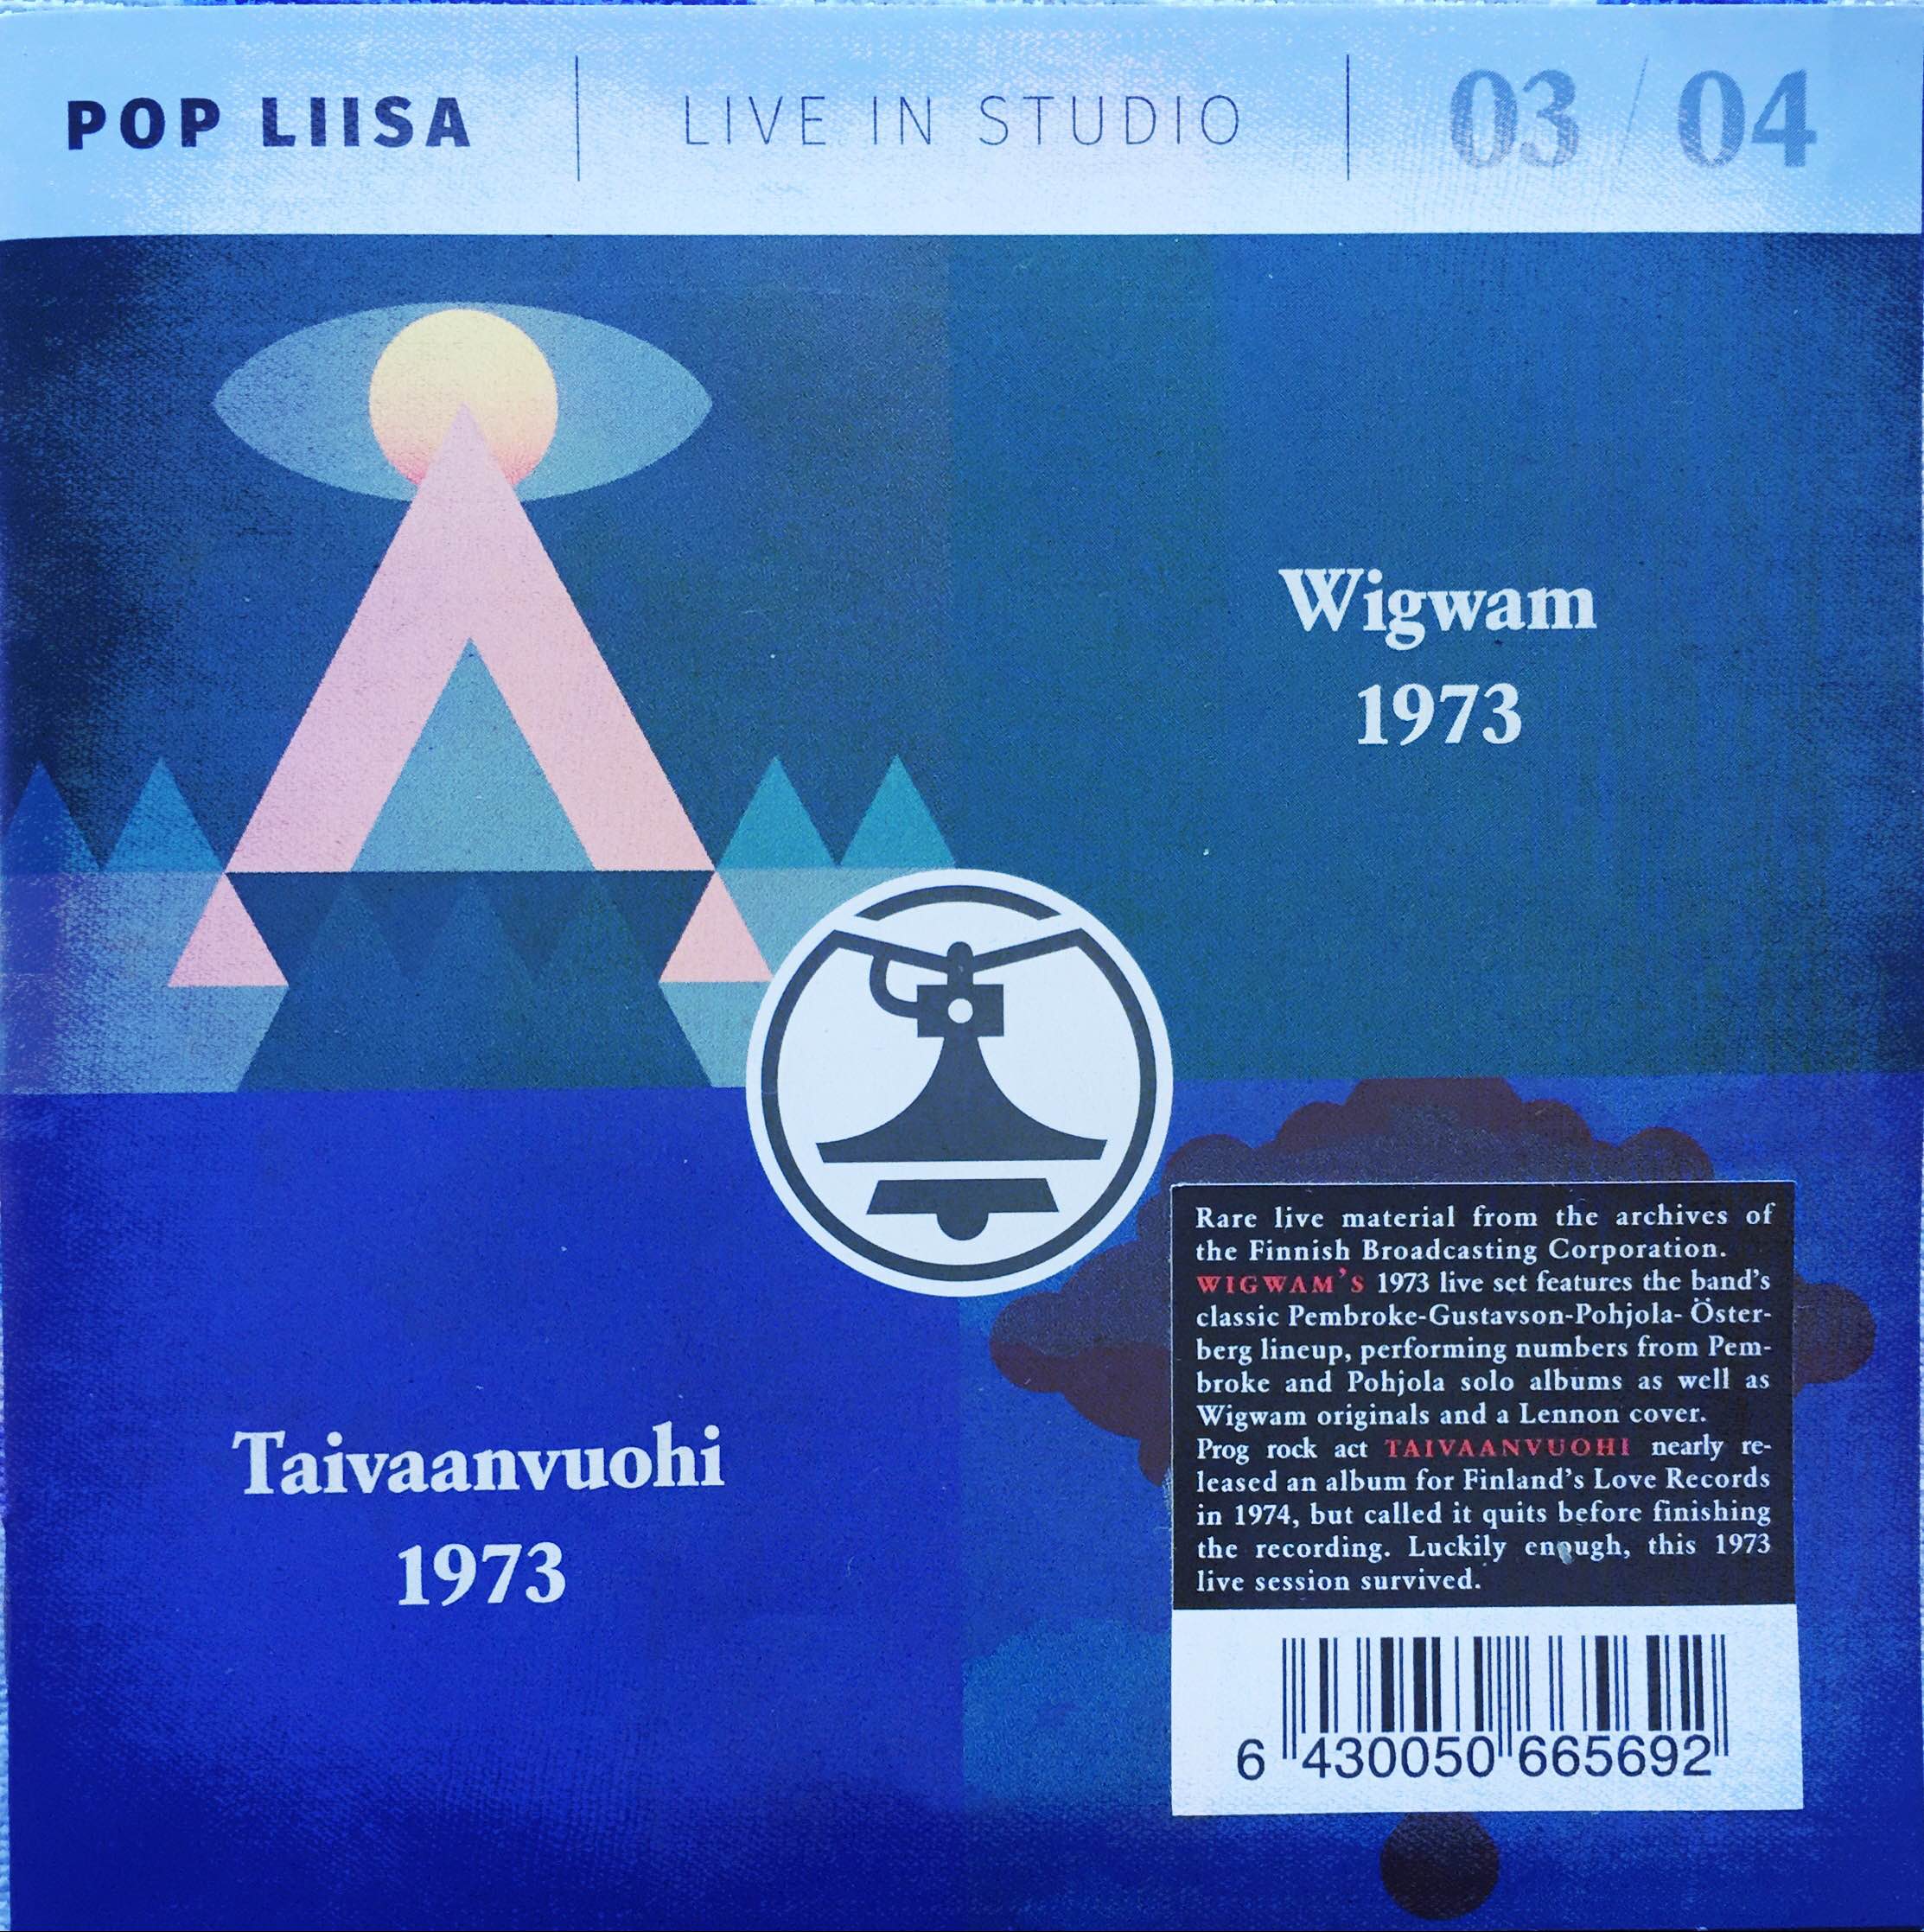 Pop Liisa 03/04: Wigwam 1973 & Taivaanvuohi 1973 (Svart Records, Yle, 2016).